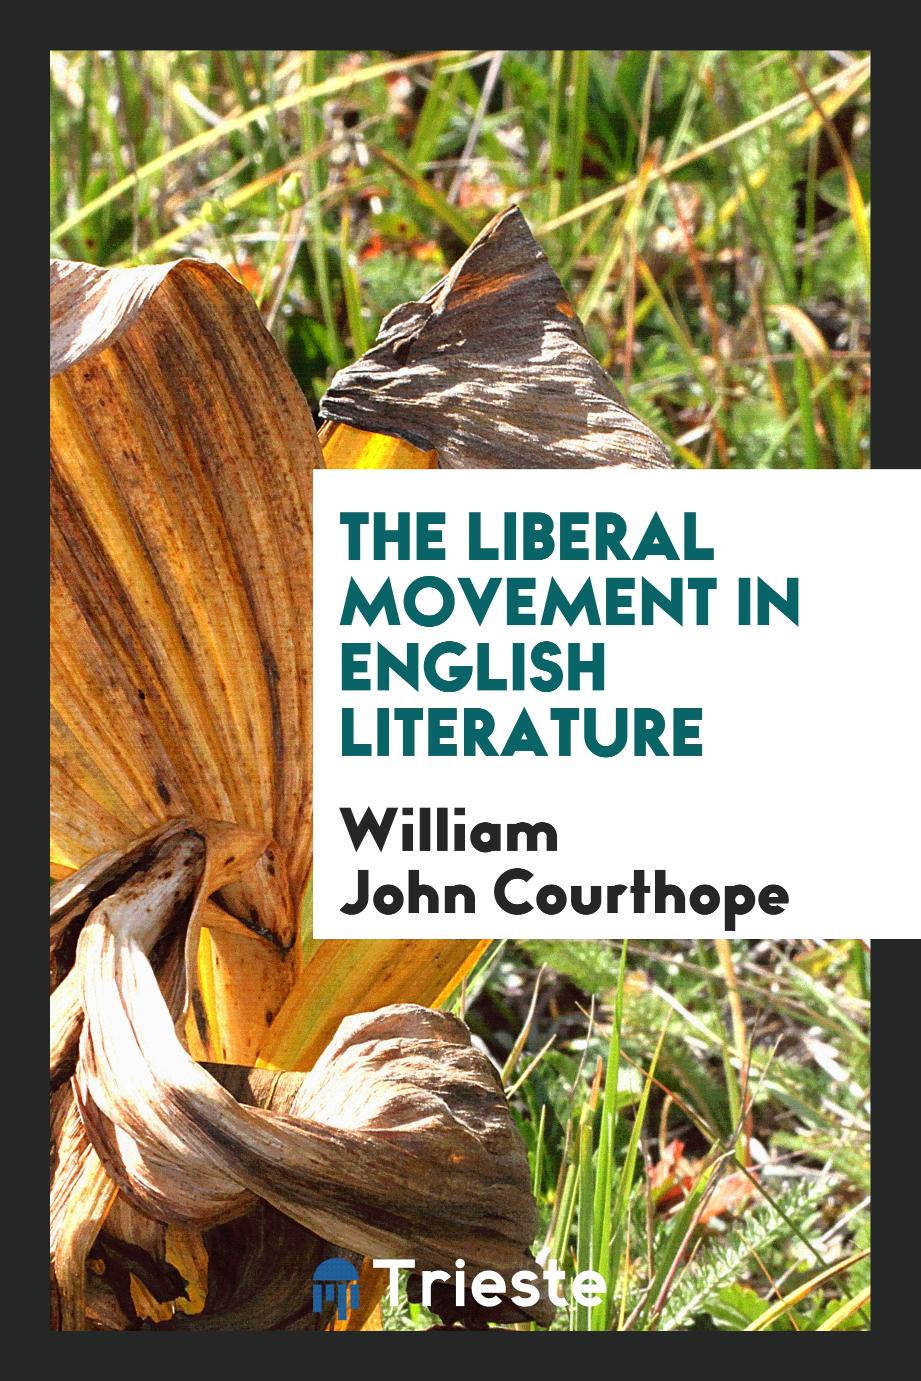 The liberal movement in English literature